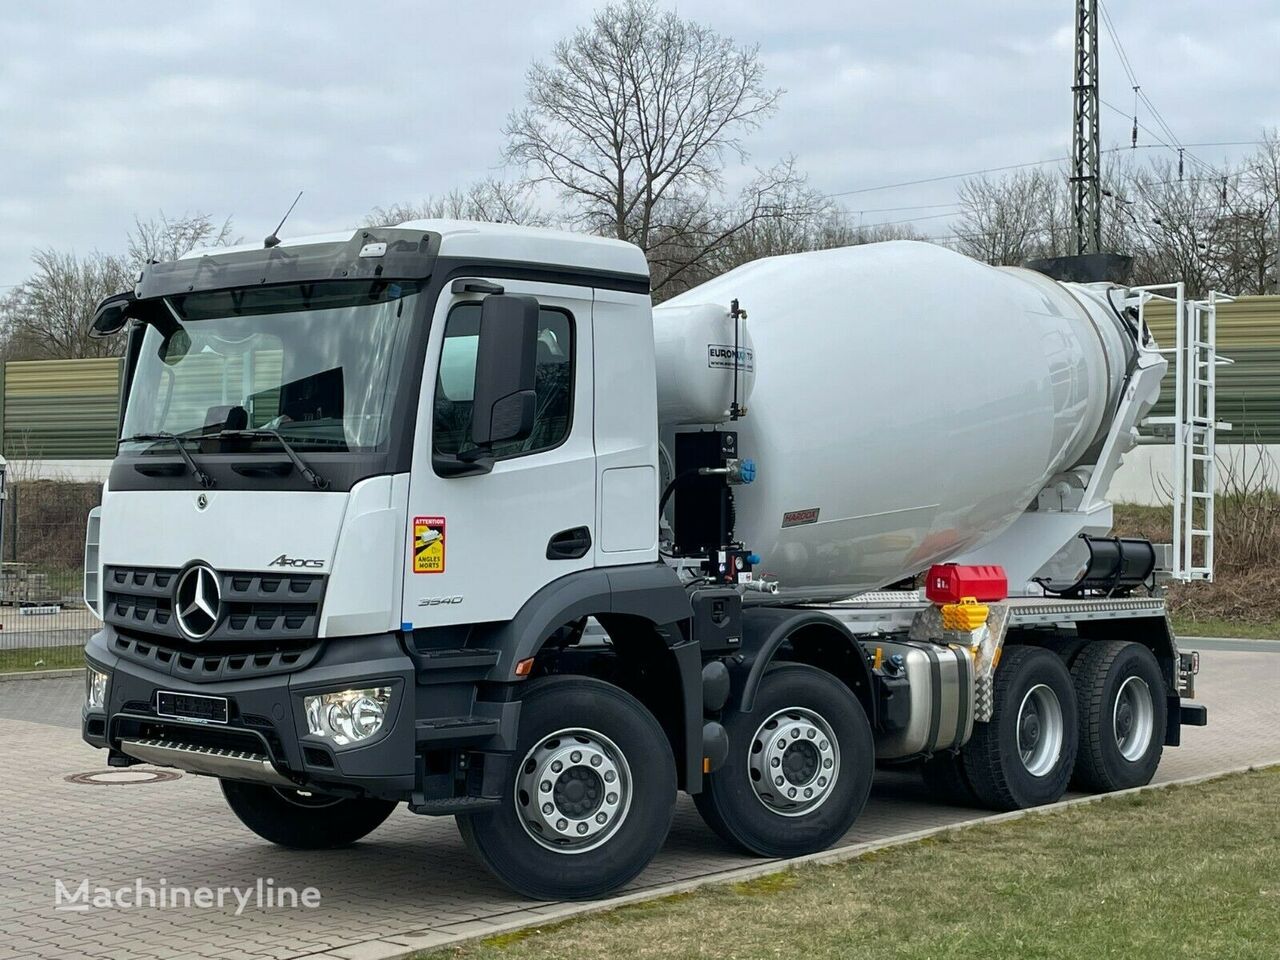 new Euromix MTP MTP EM 9 L on chassis Mercedes-Benz Arocs 5 3540 concrete mixer truck